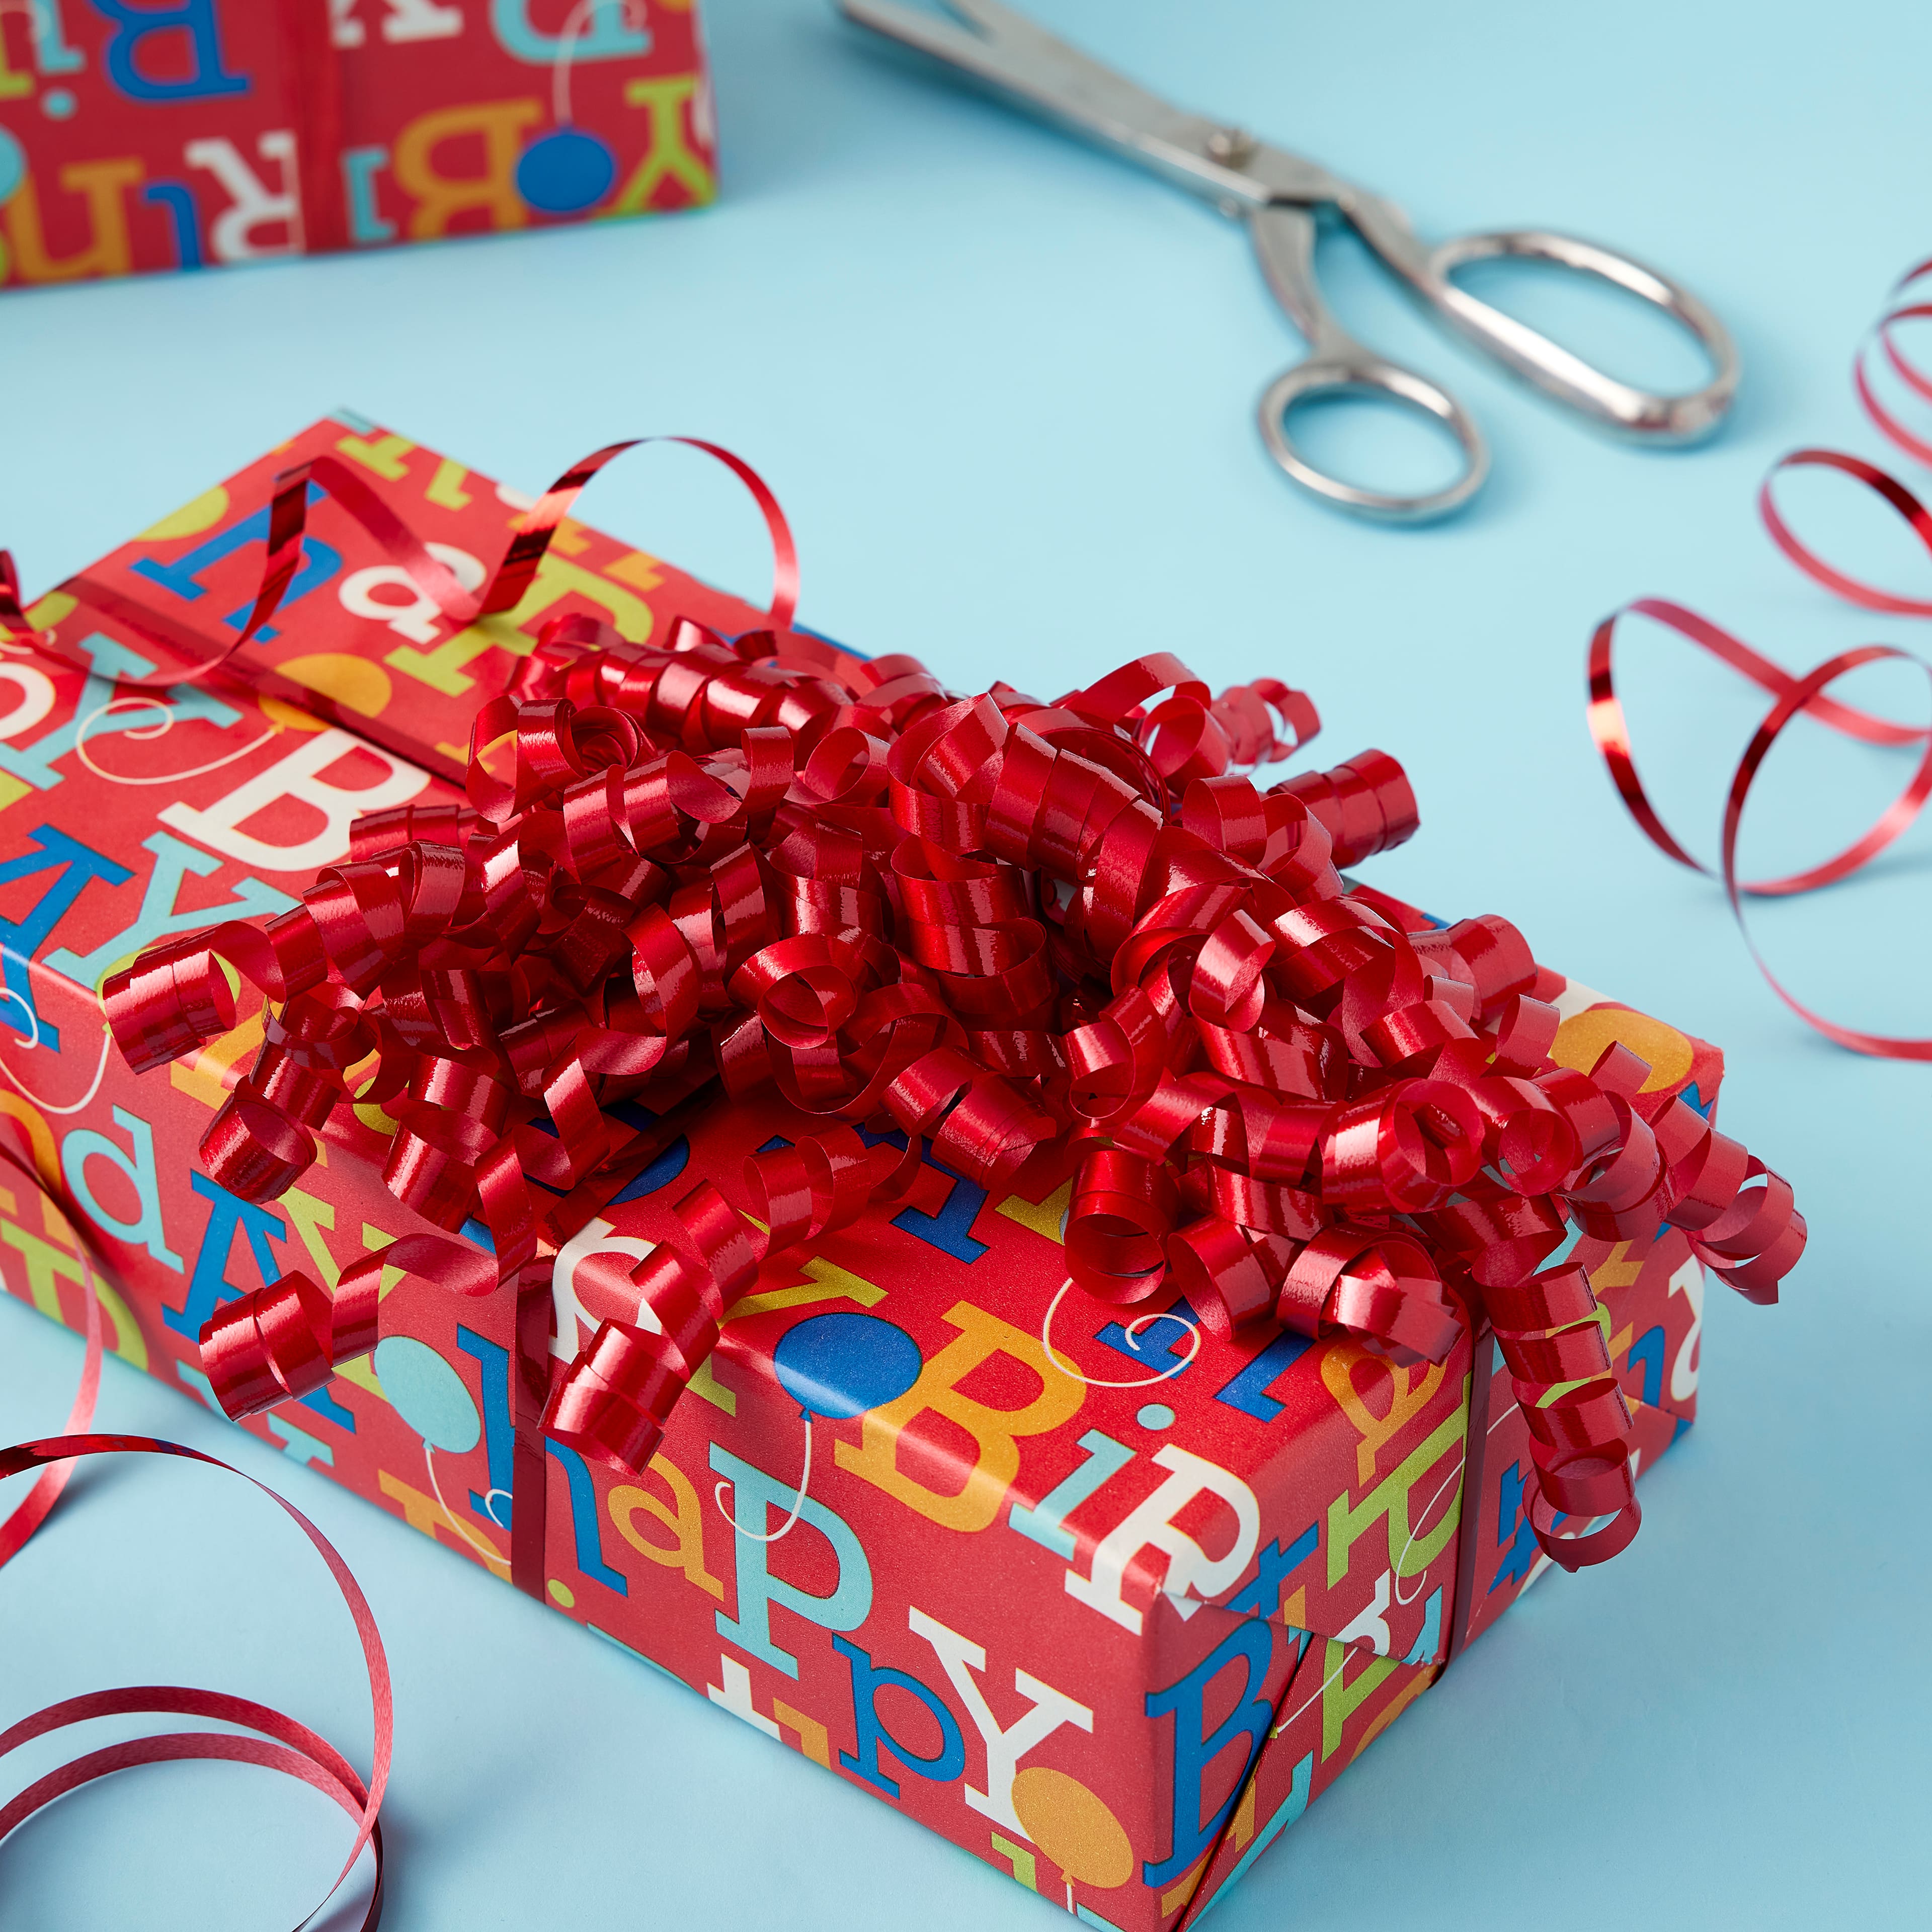 Kraft Gift Wrap Paper by Celebrate It™